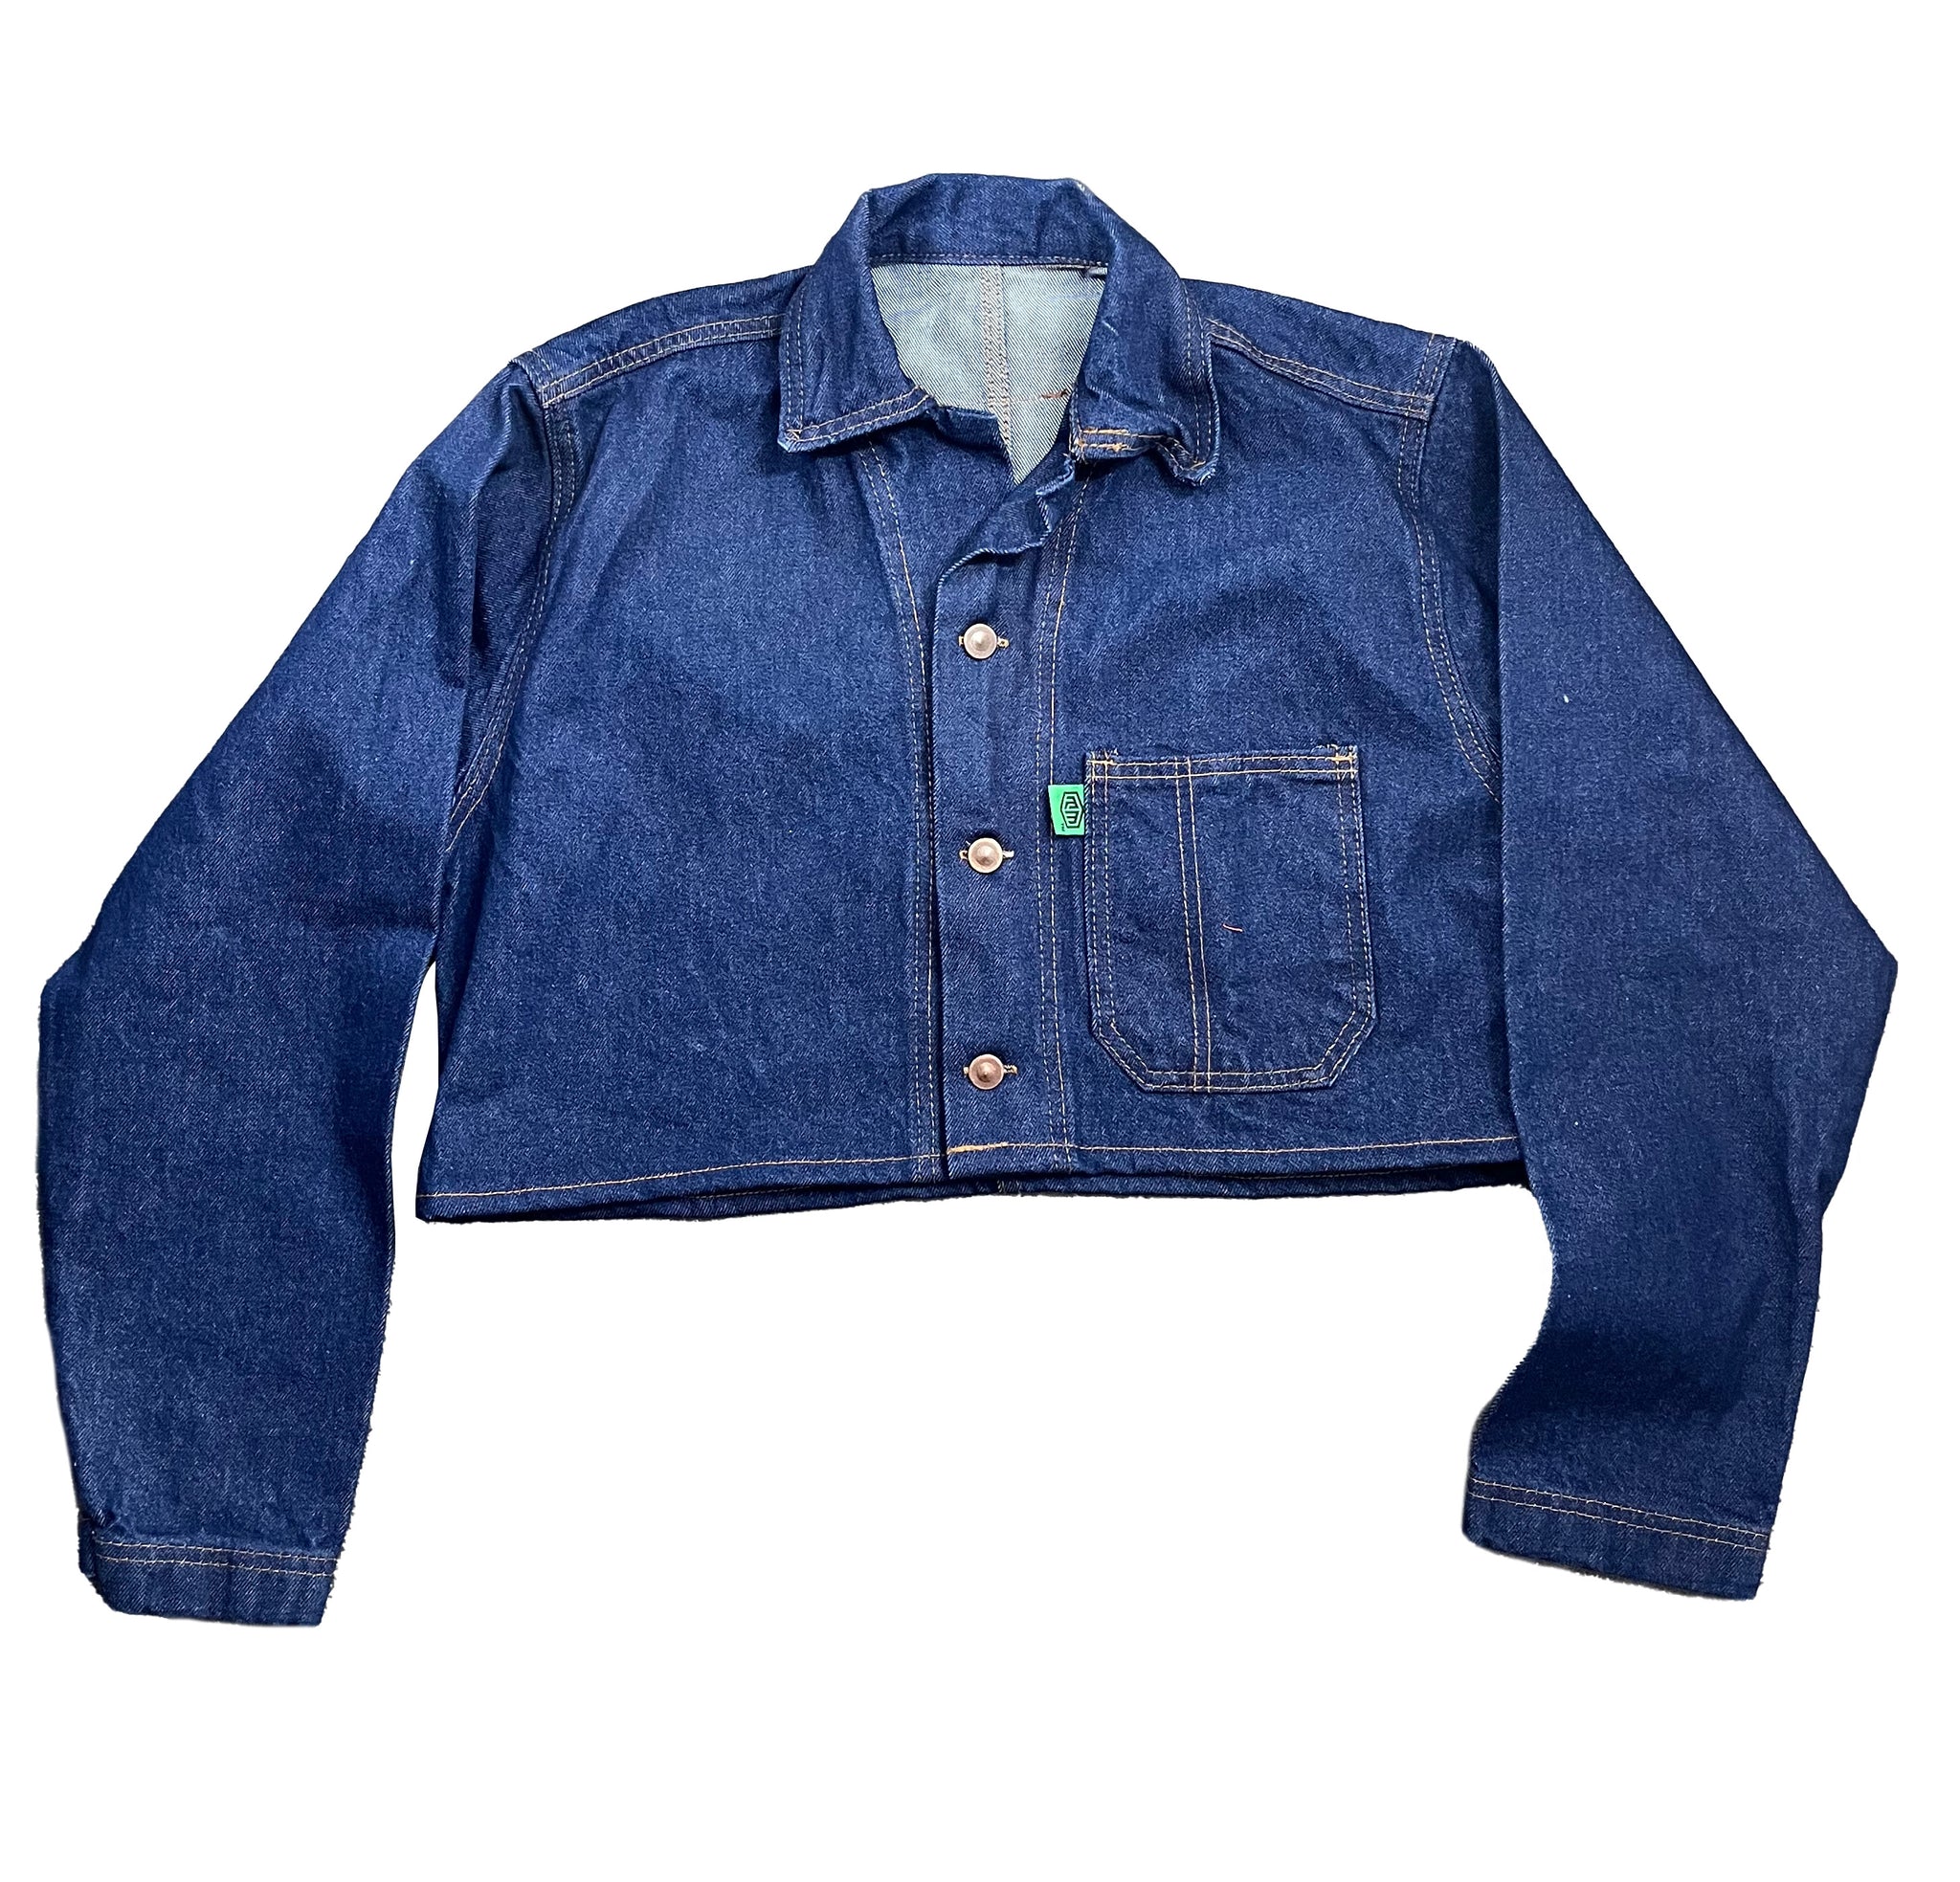 Basic denim jacket - cropped (dark blue)